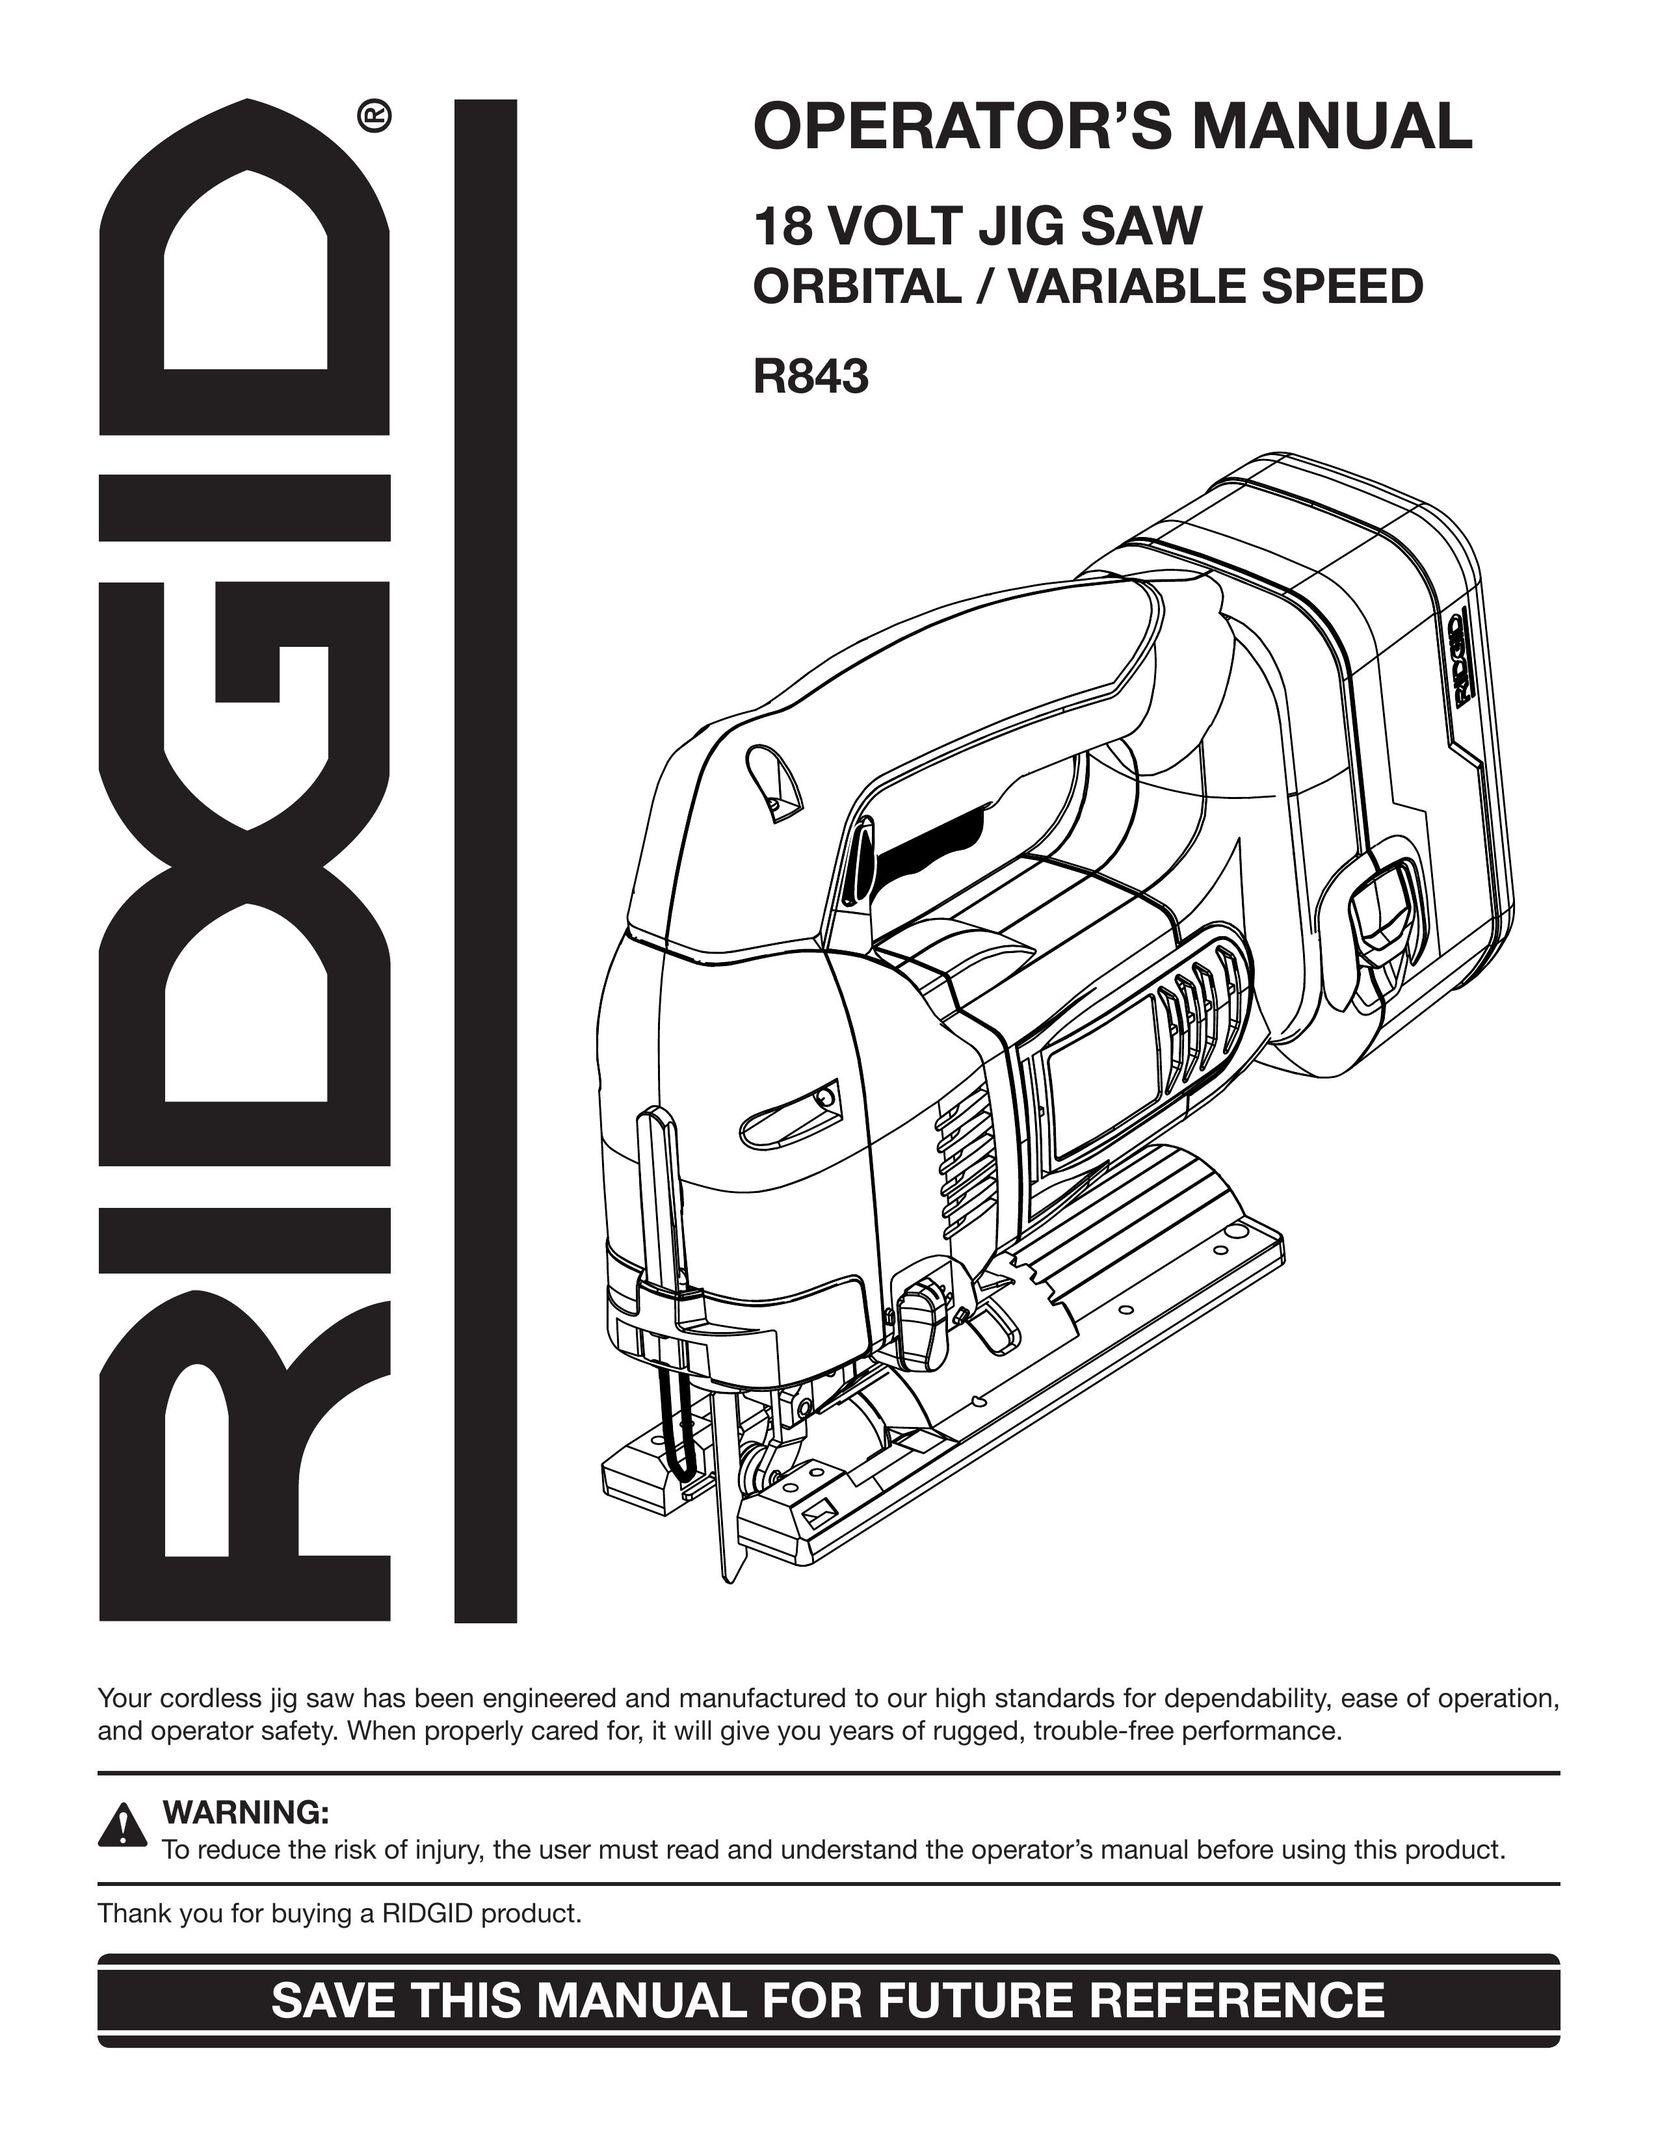 RIDGID R843 Saw User Manual